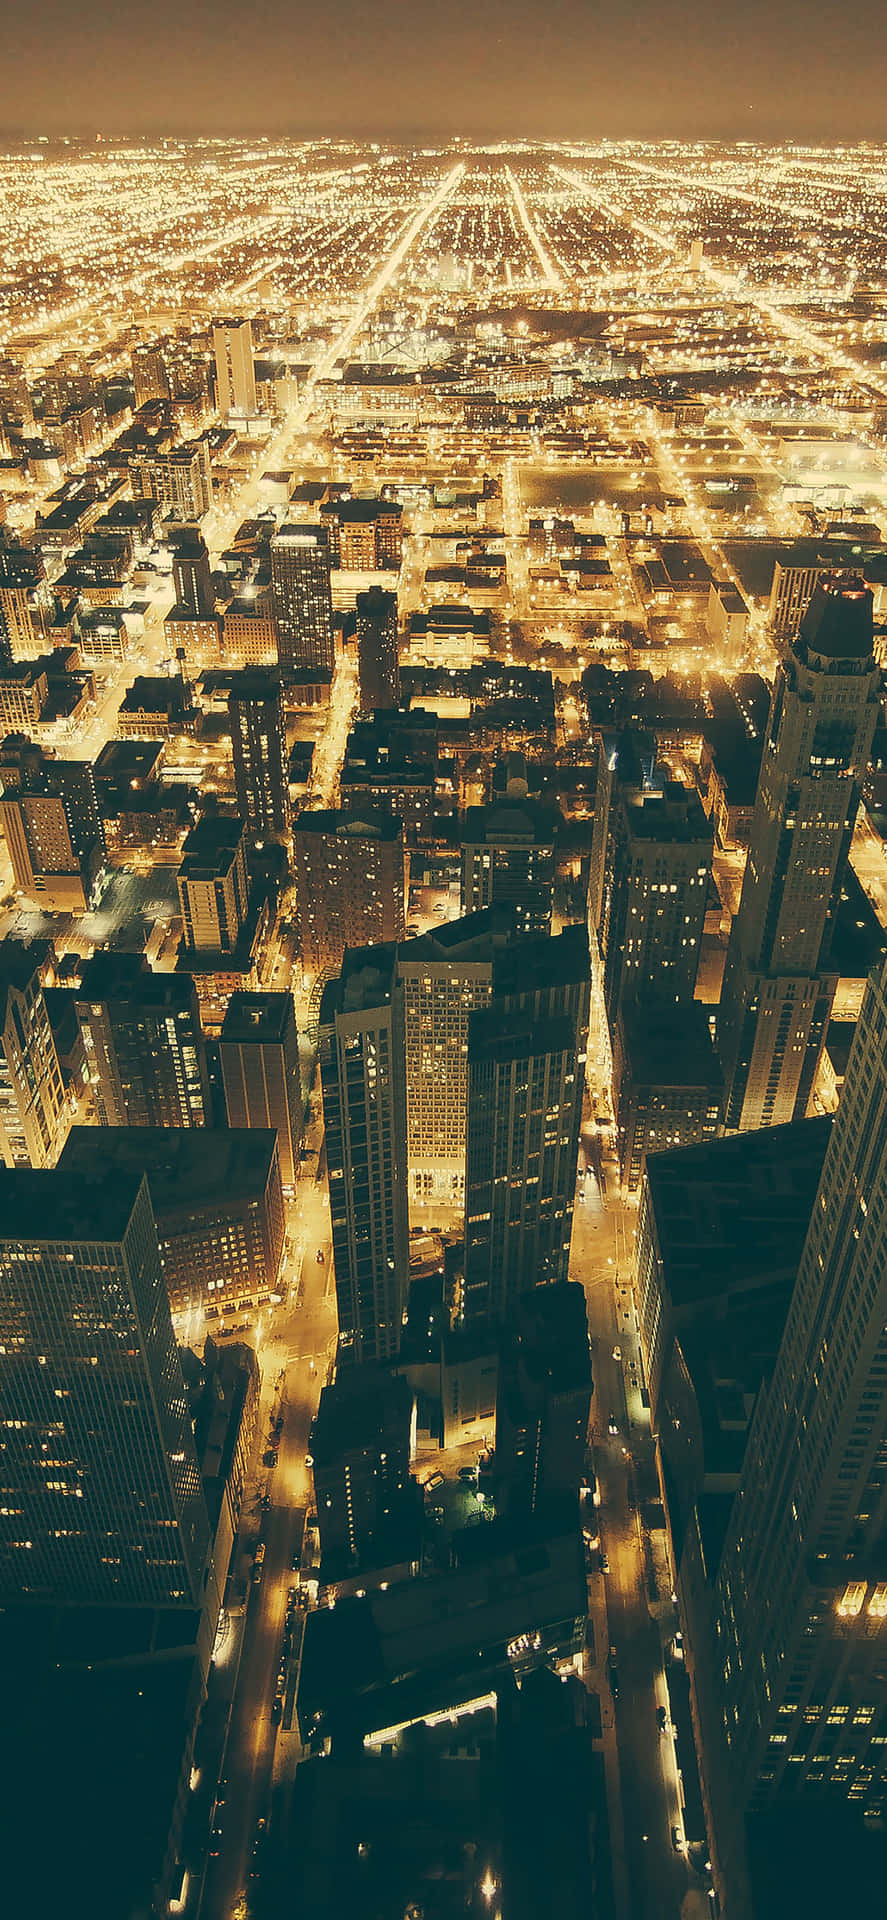 Glitrende lys oplyser Chicago By om natten Wallpaper